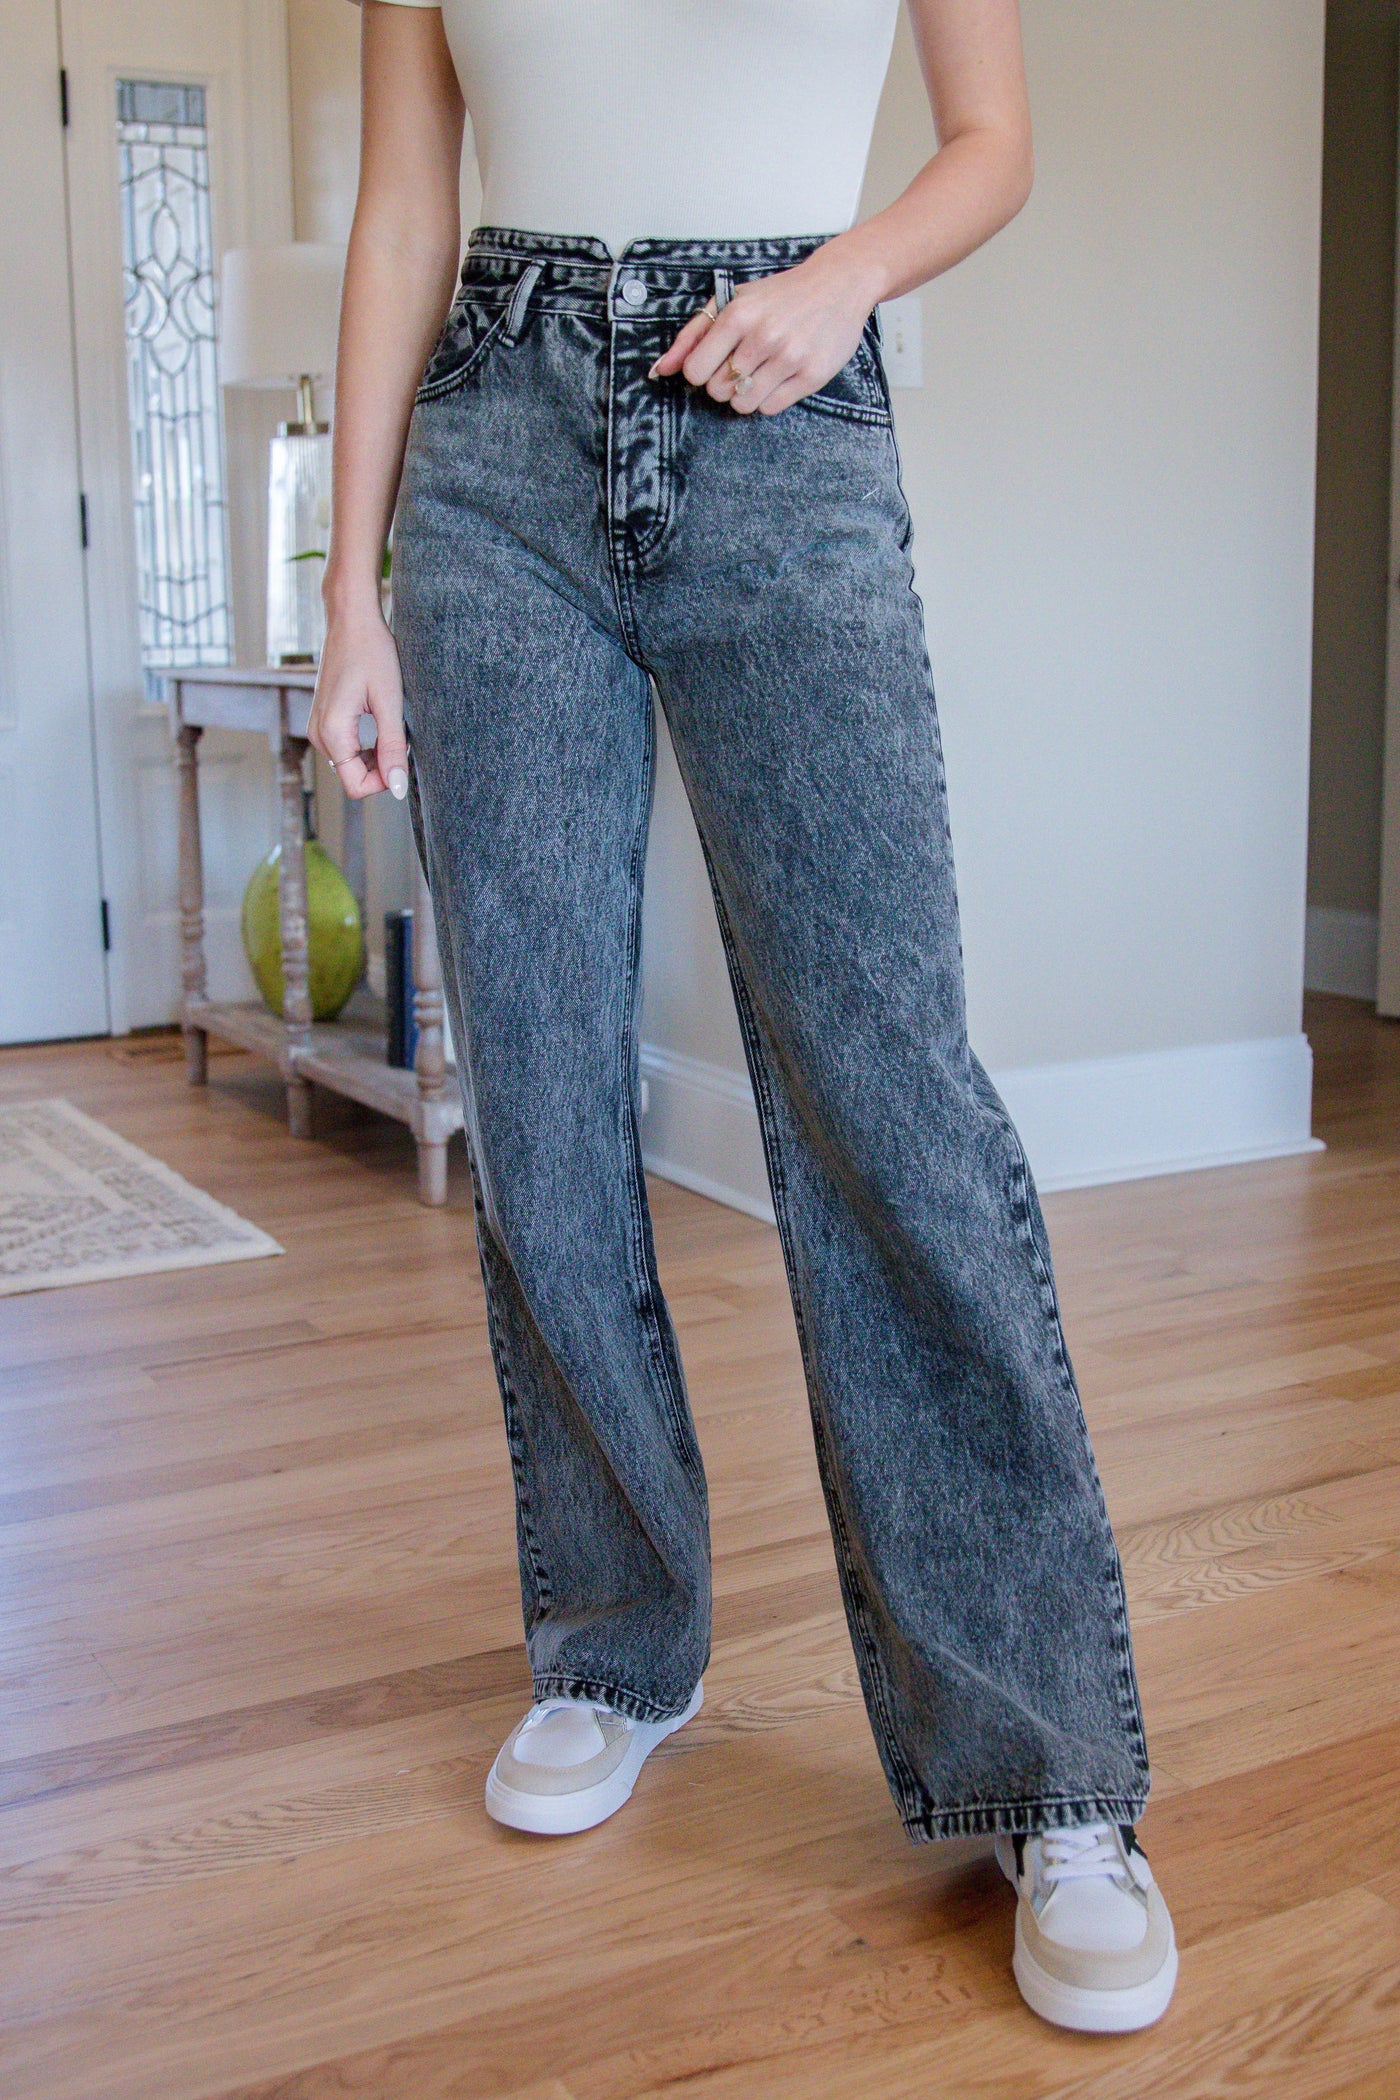 High Rise Straight Leg Jeans- Women's Black Denim- KanCan Jeans- 90s Style Jeans